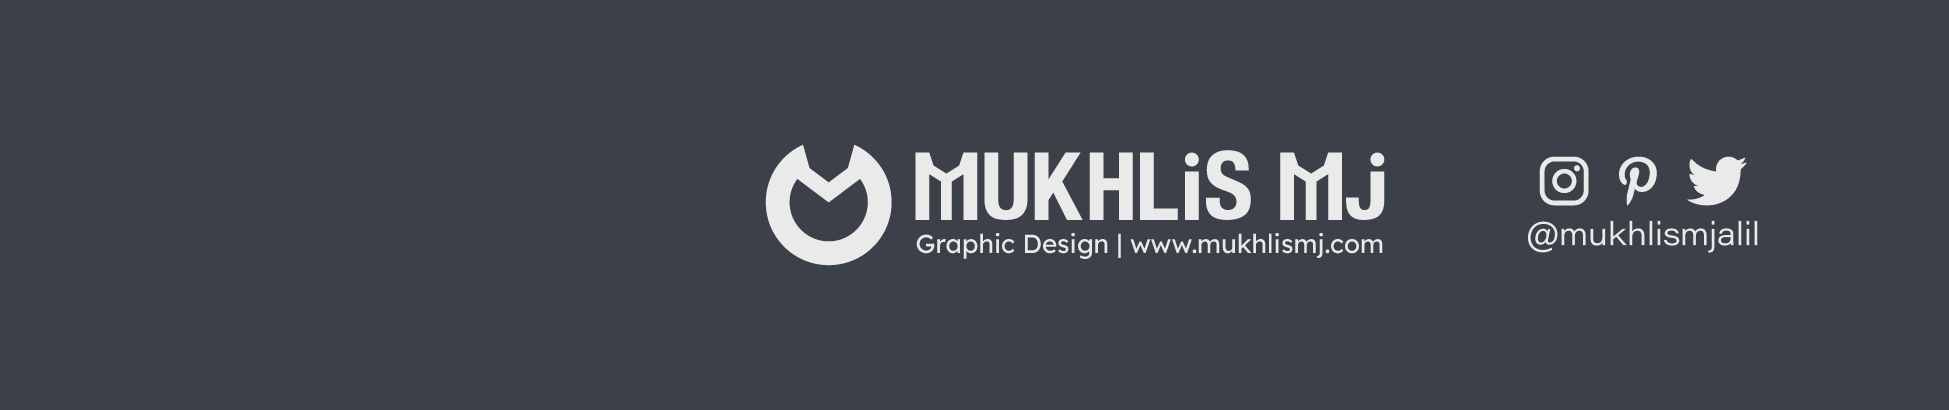 Mukhlis MJ's profile banner